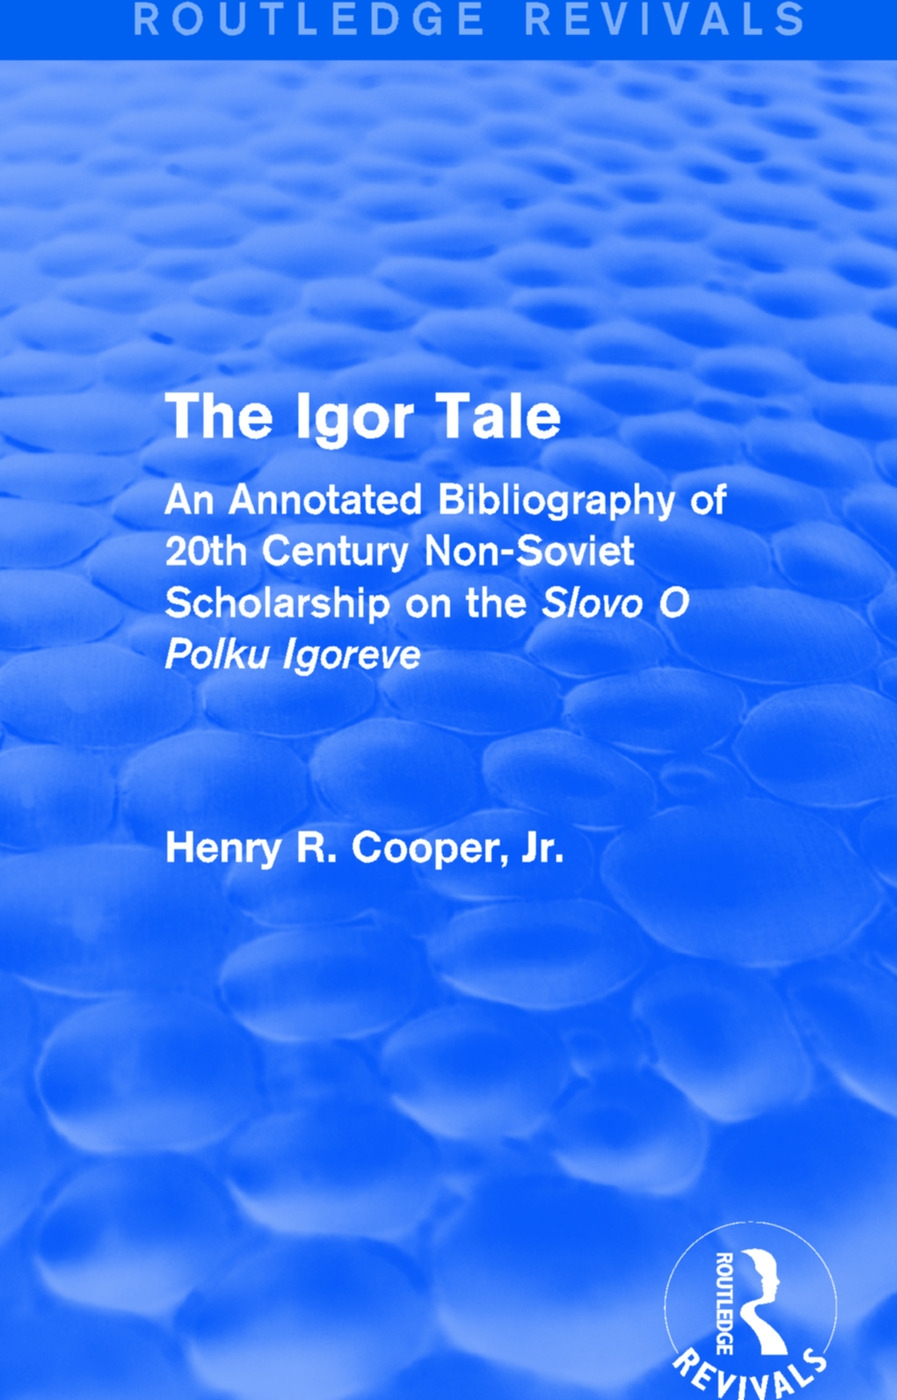 The Igor Tale: An Annotated Bibliography of 20th Century Non-Soviet Scholarship on the Slovo O Polku Igoreve